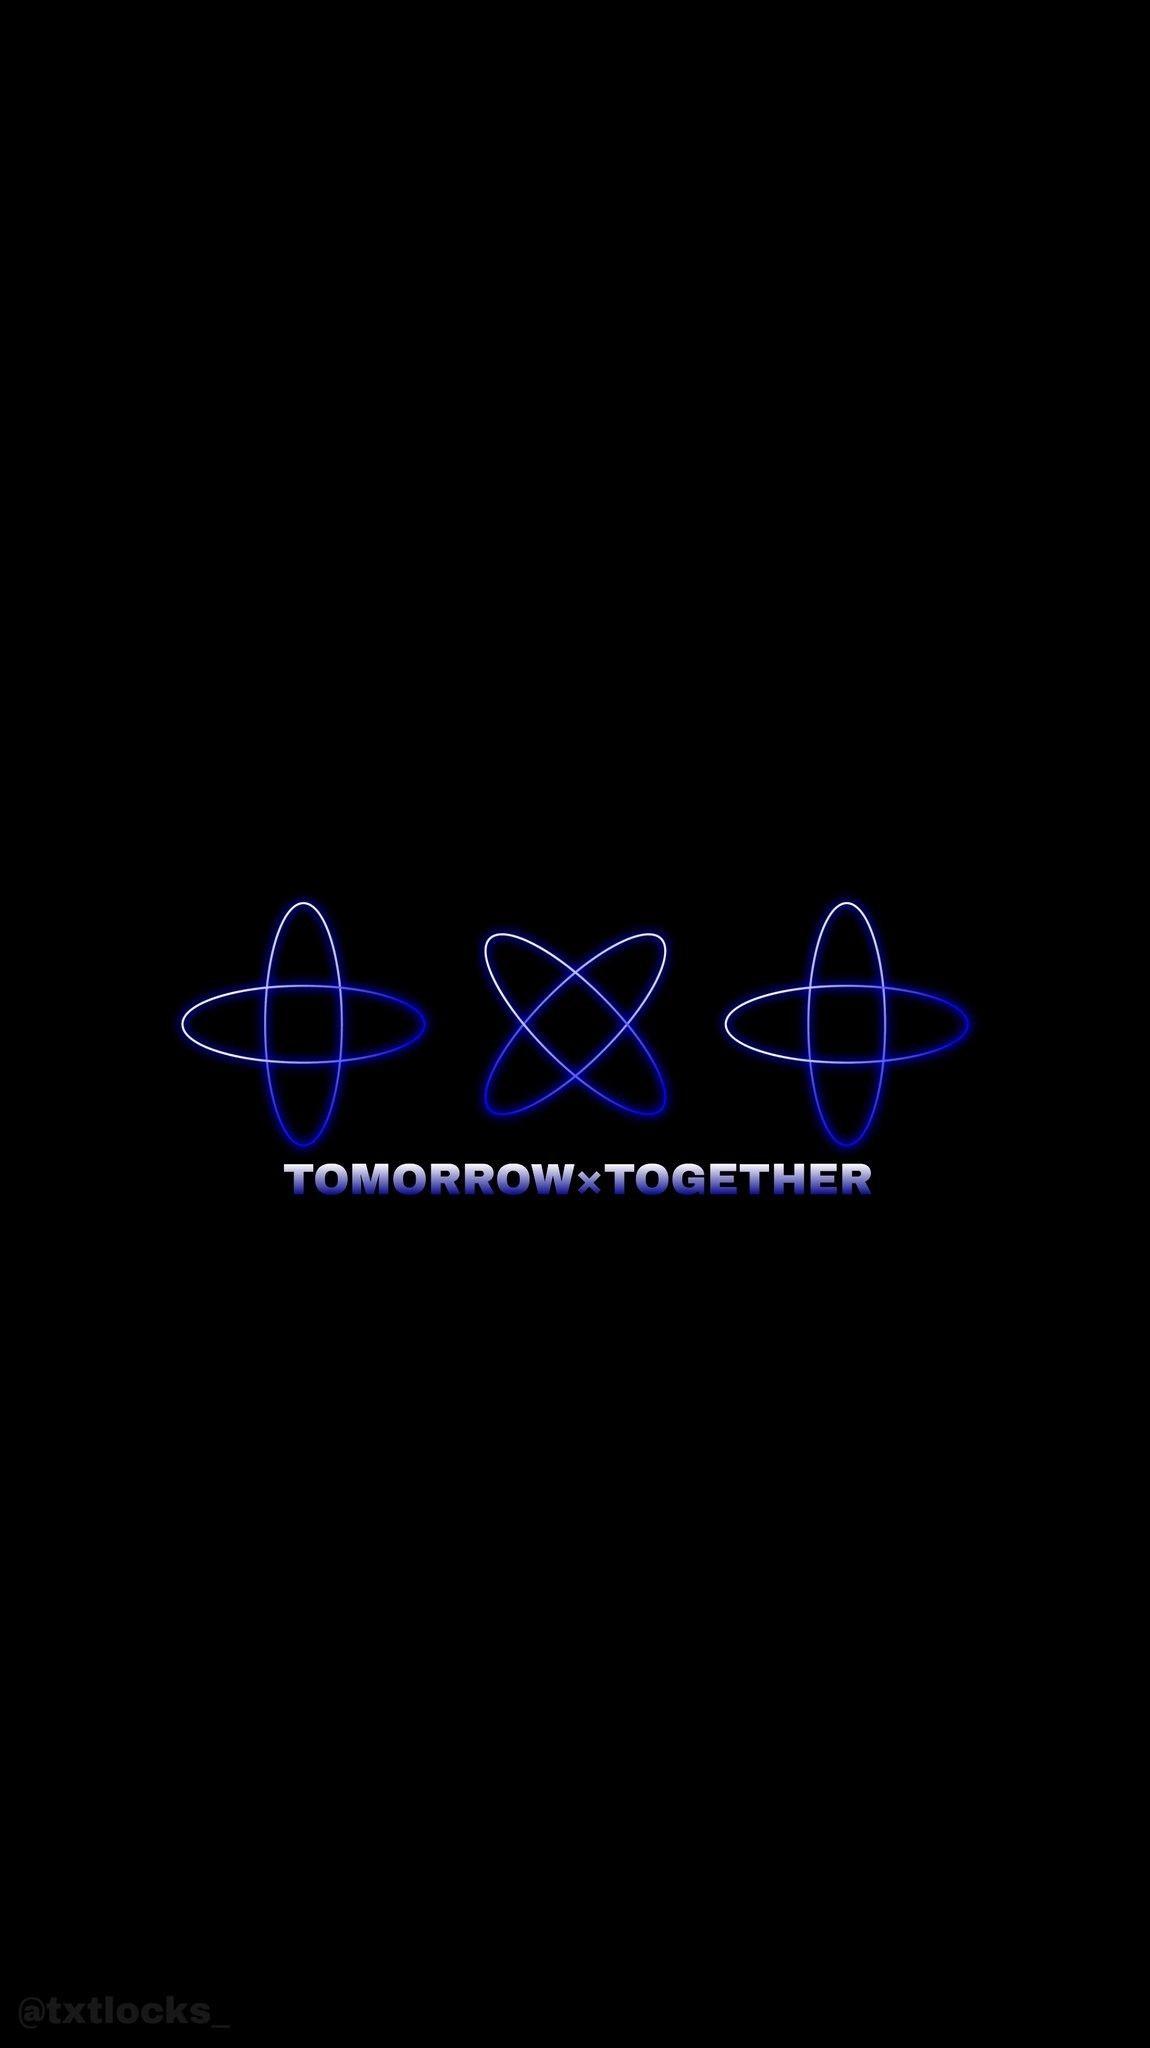 Tomorrow x together. Bingkai foto, Fotografi, Latar belakang